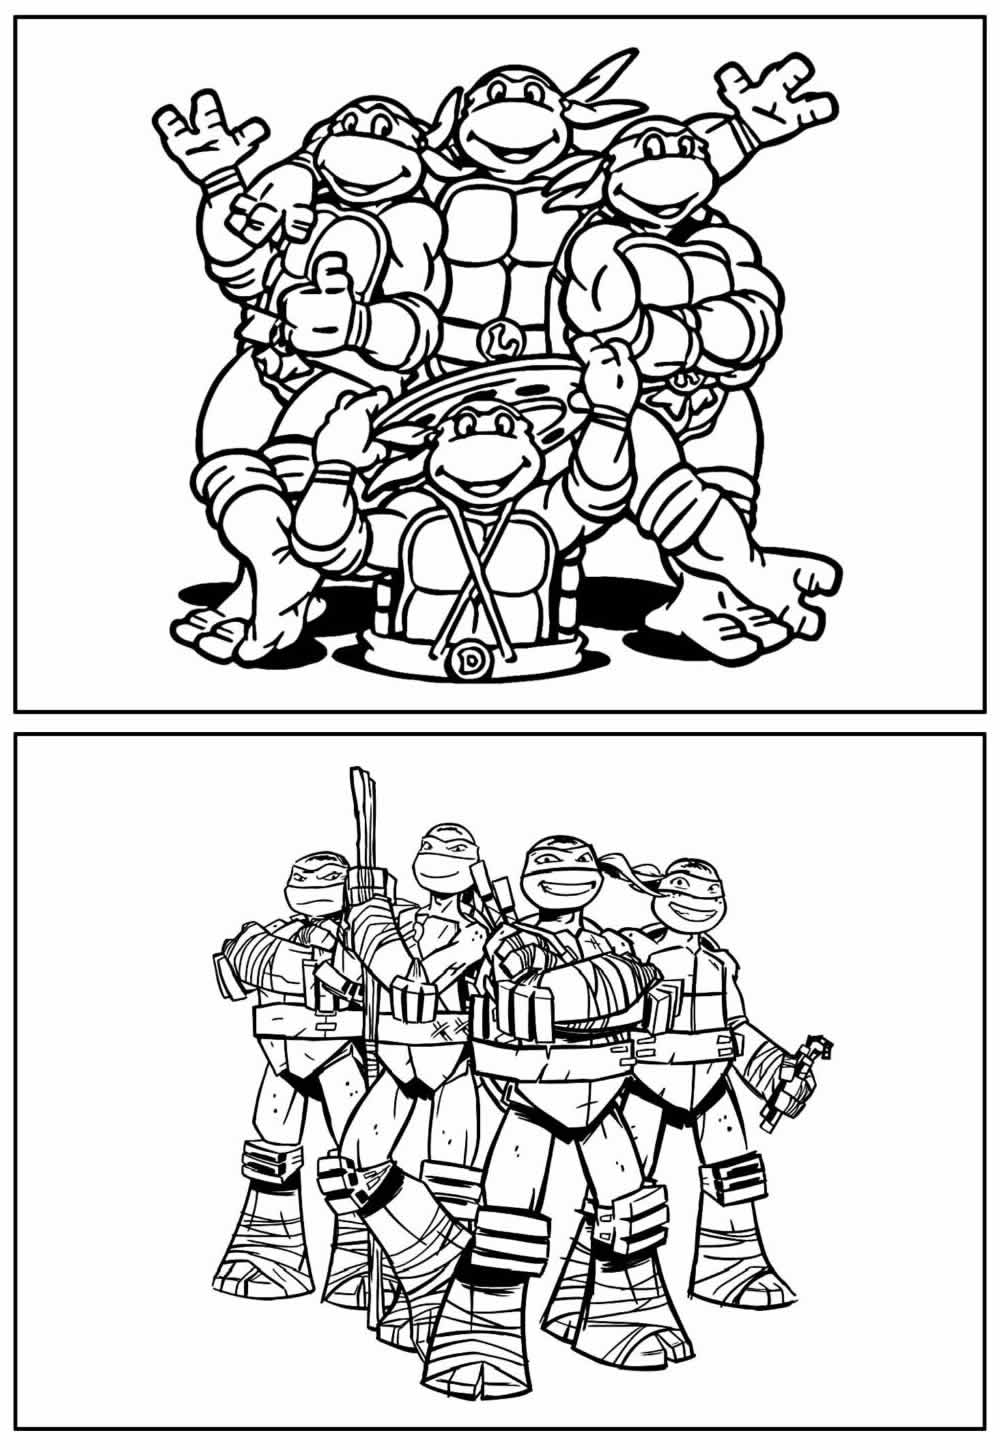 Desenho para colorir - Tartarugas Ninja